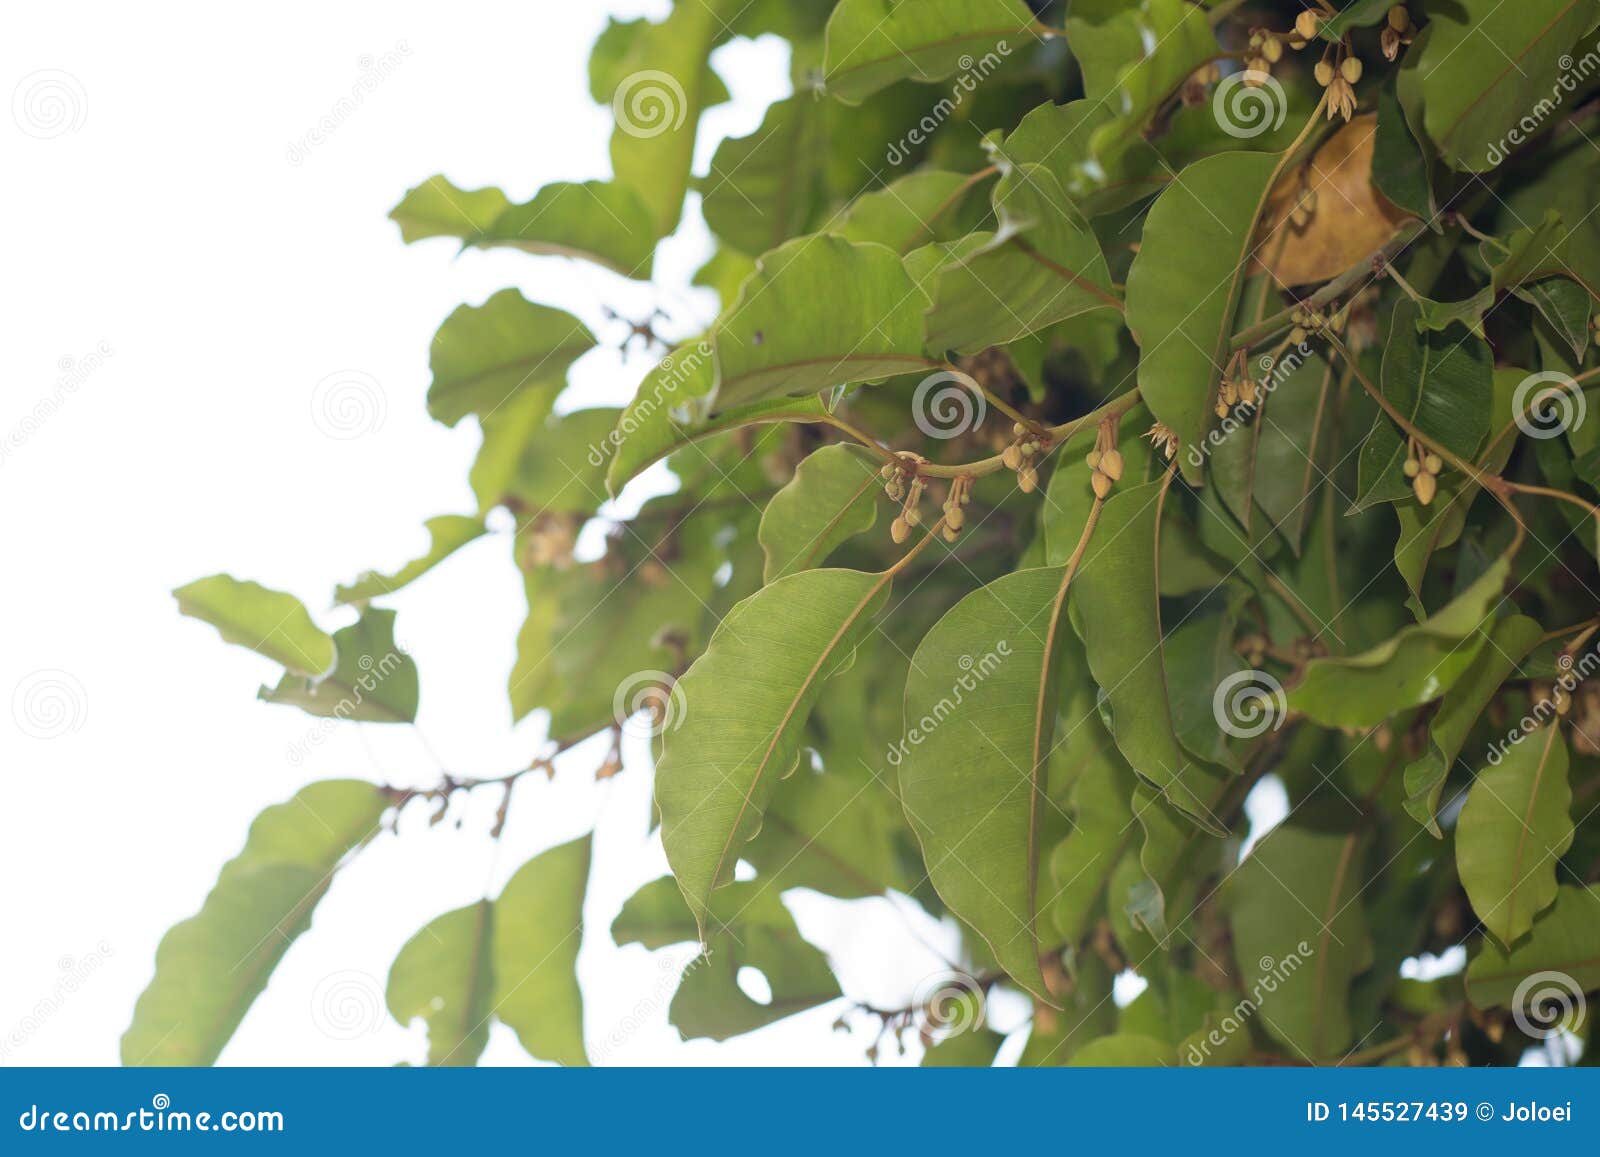 mimusops elengi or bullet wood, headland flower, medlar, mimusops, spanish cherry, tanjong tree